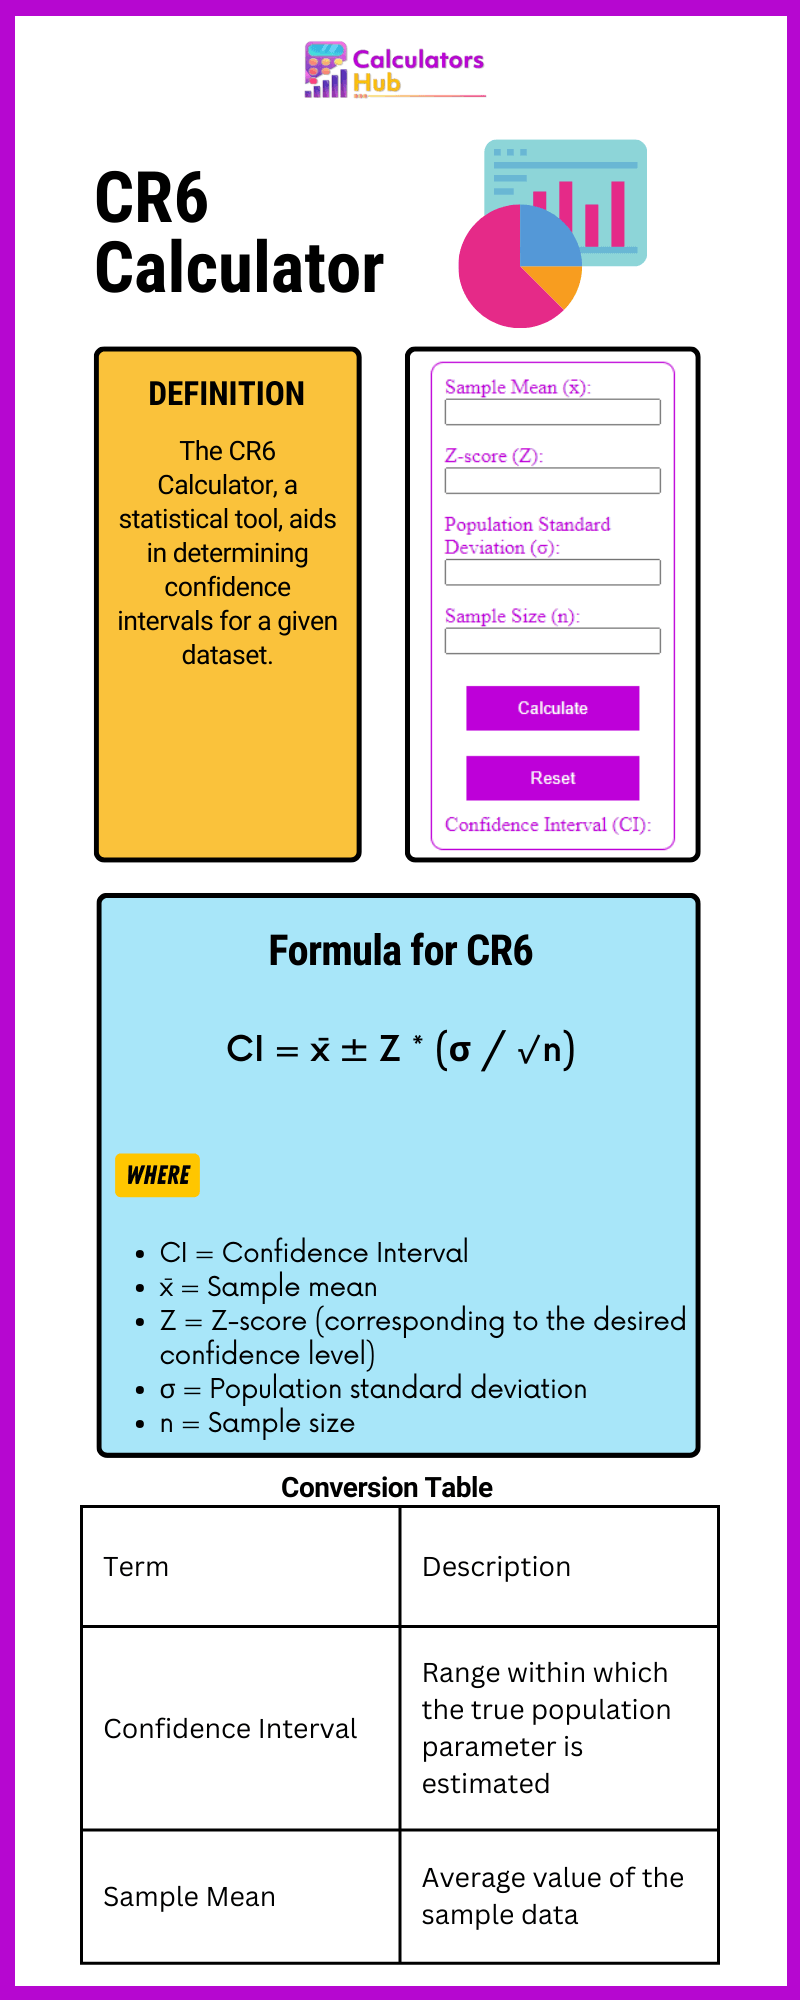 CR6 Calculator